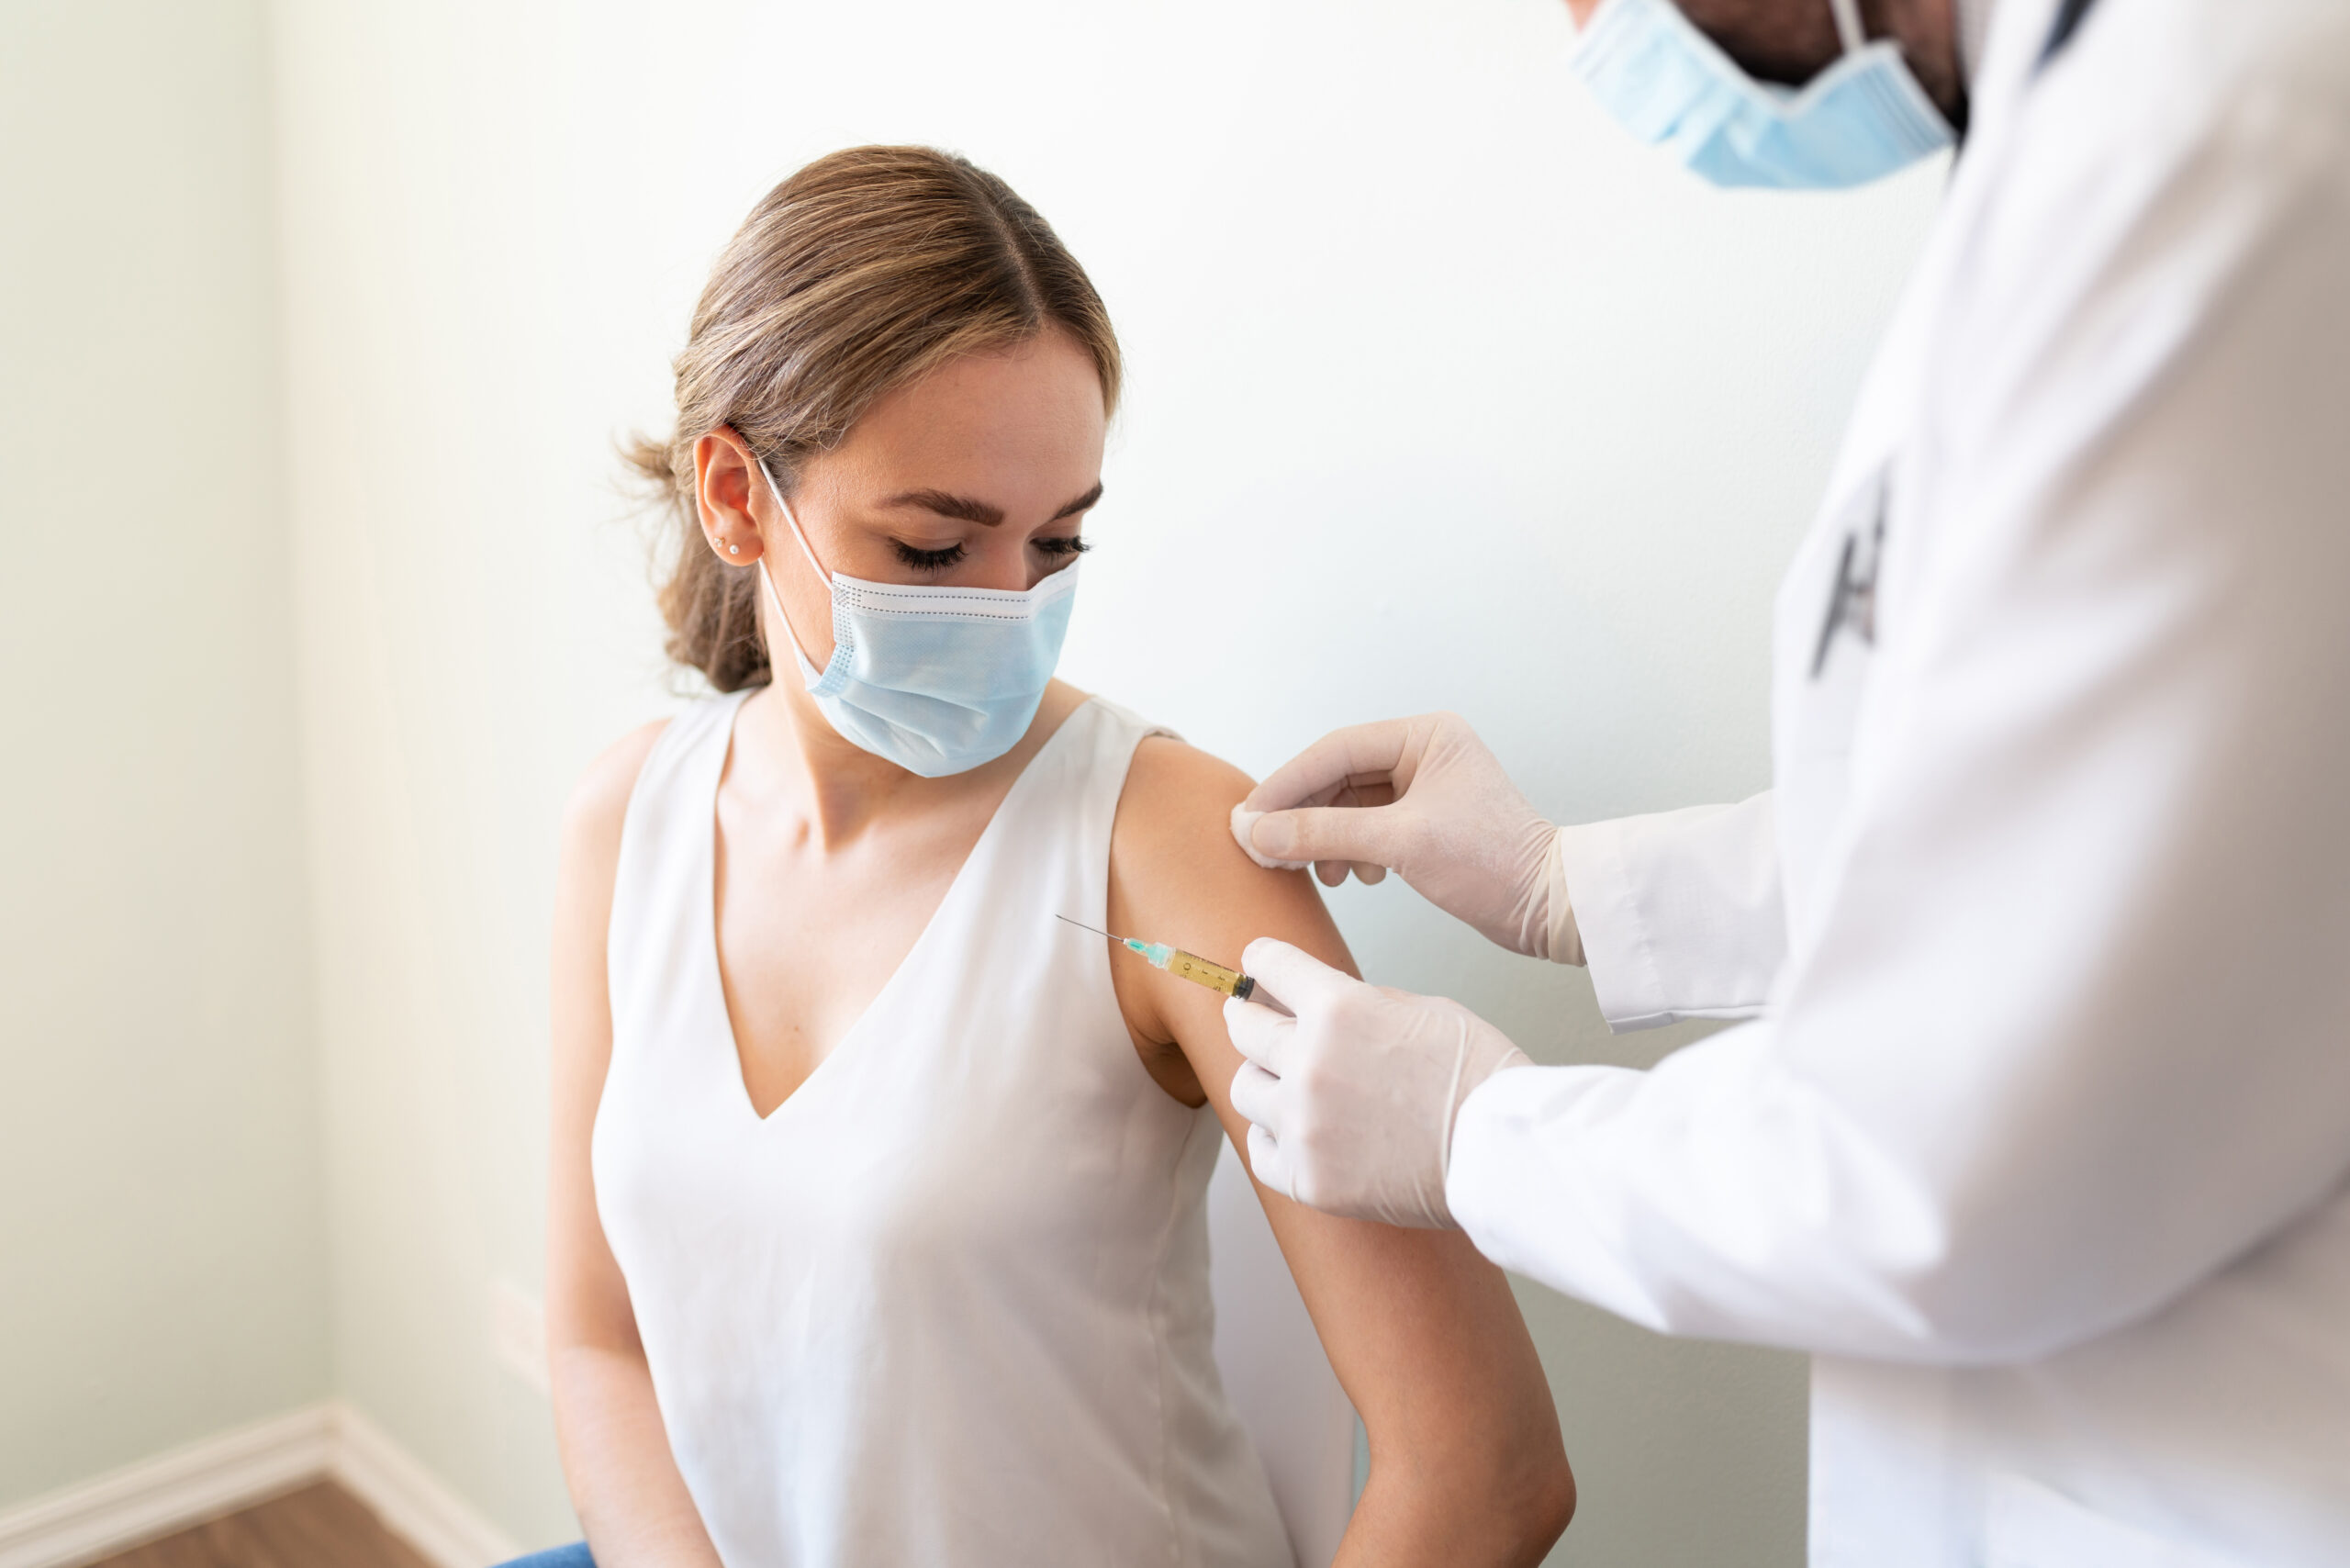 Good Samaritan Health Centers Of Gwinnett Joins Project HOPE To Increase Vaccine Access Among Minorities In Georgia